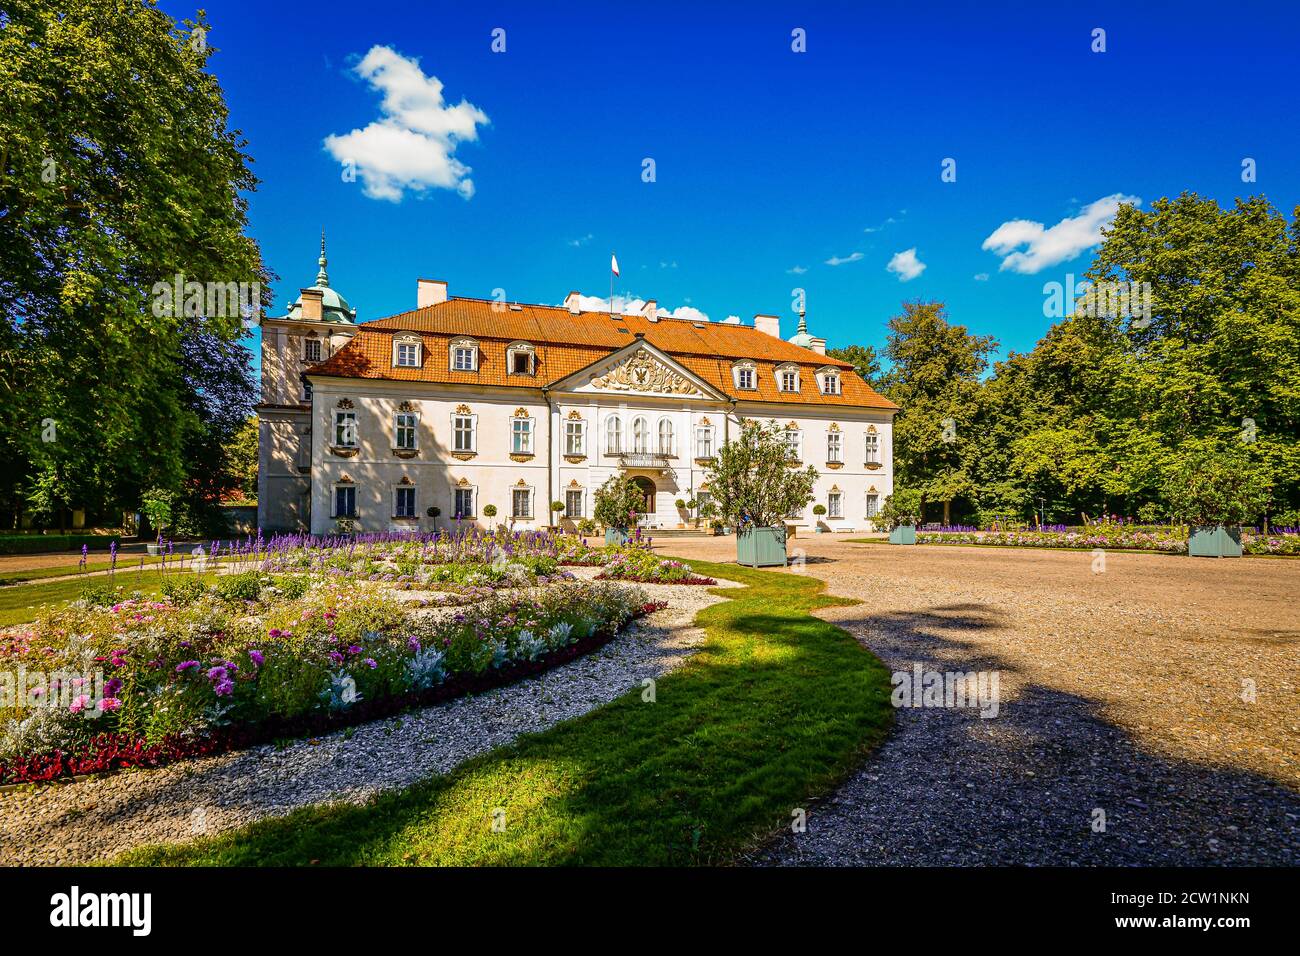 Baroque palace in Nieborów, Poland Stock Photo